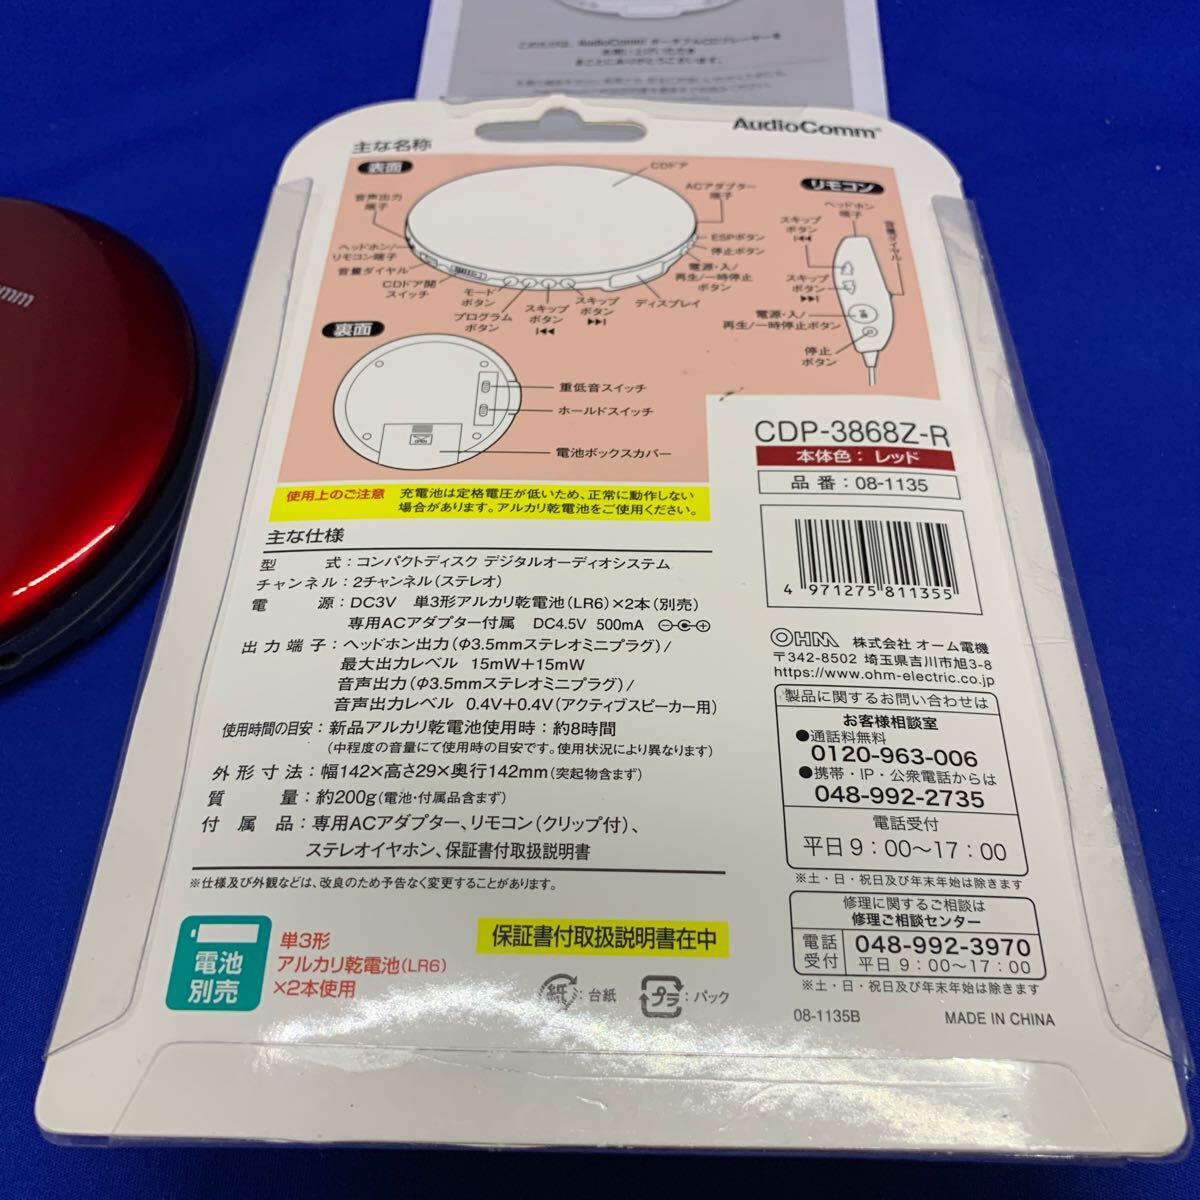 Z9821 ом электро- машина AudioComm портативный CD плеер красный CDP-3868Z-R 08-1135 OHM